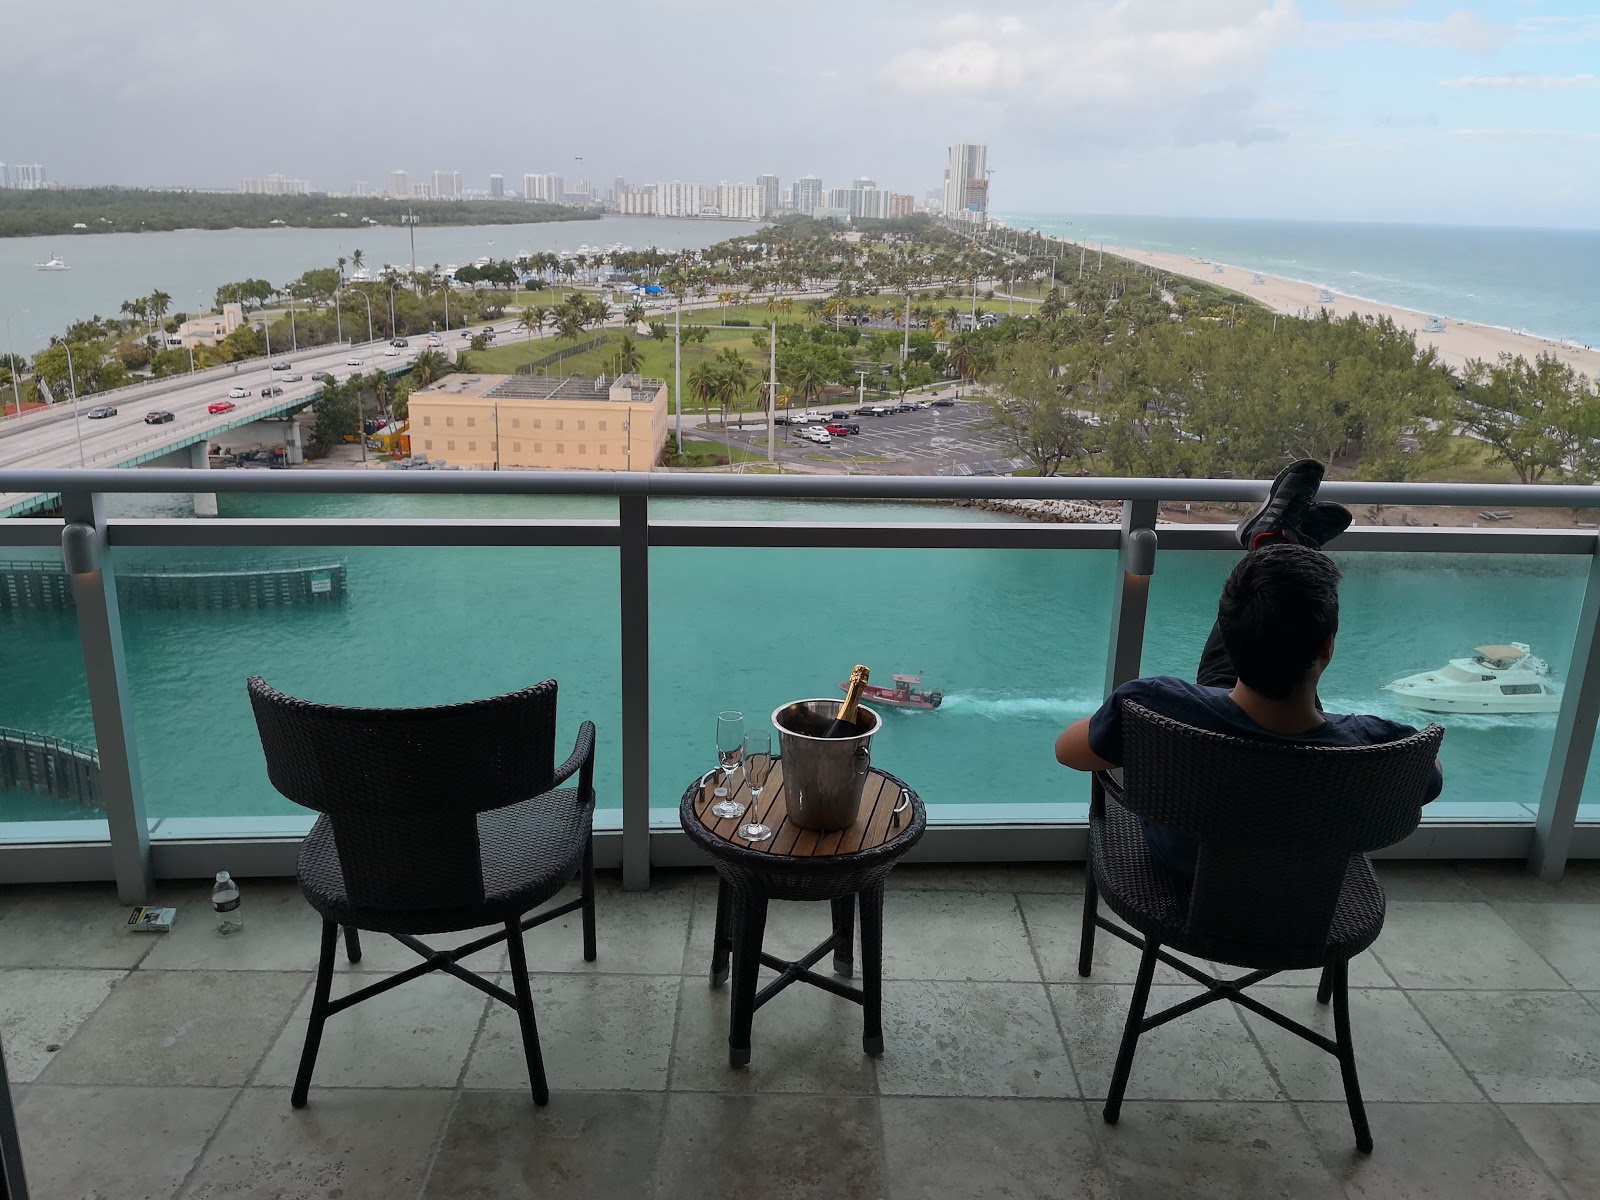 Checking out this insane view at Ritz Carlton Bal Harbour (Miami)